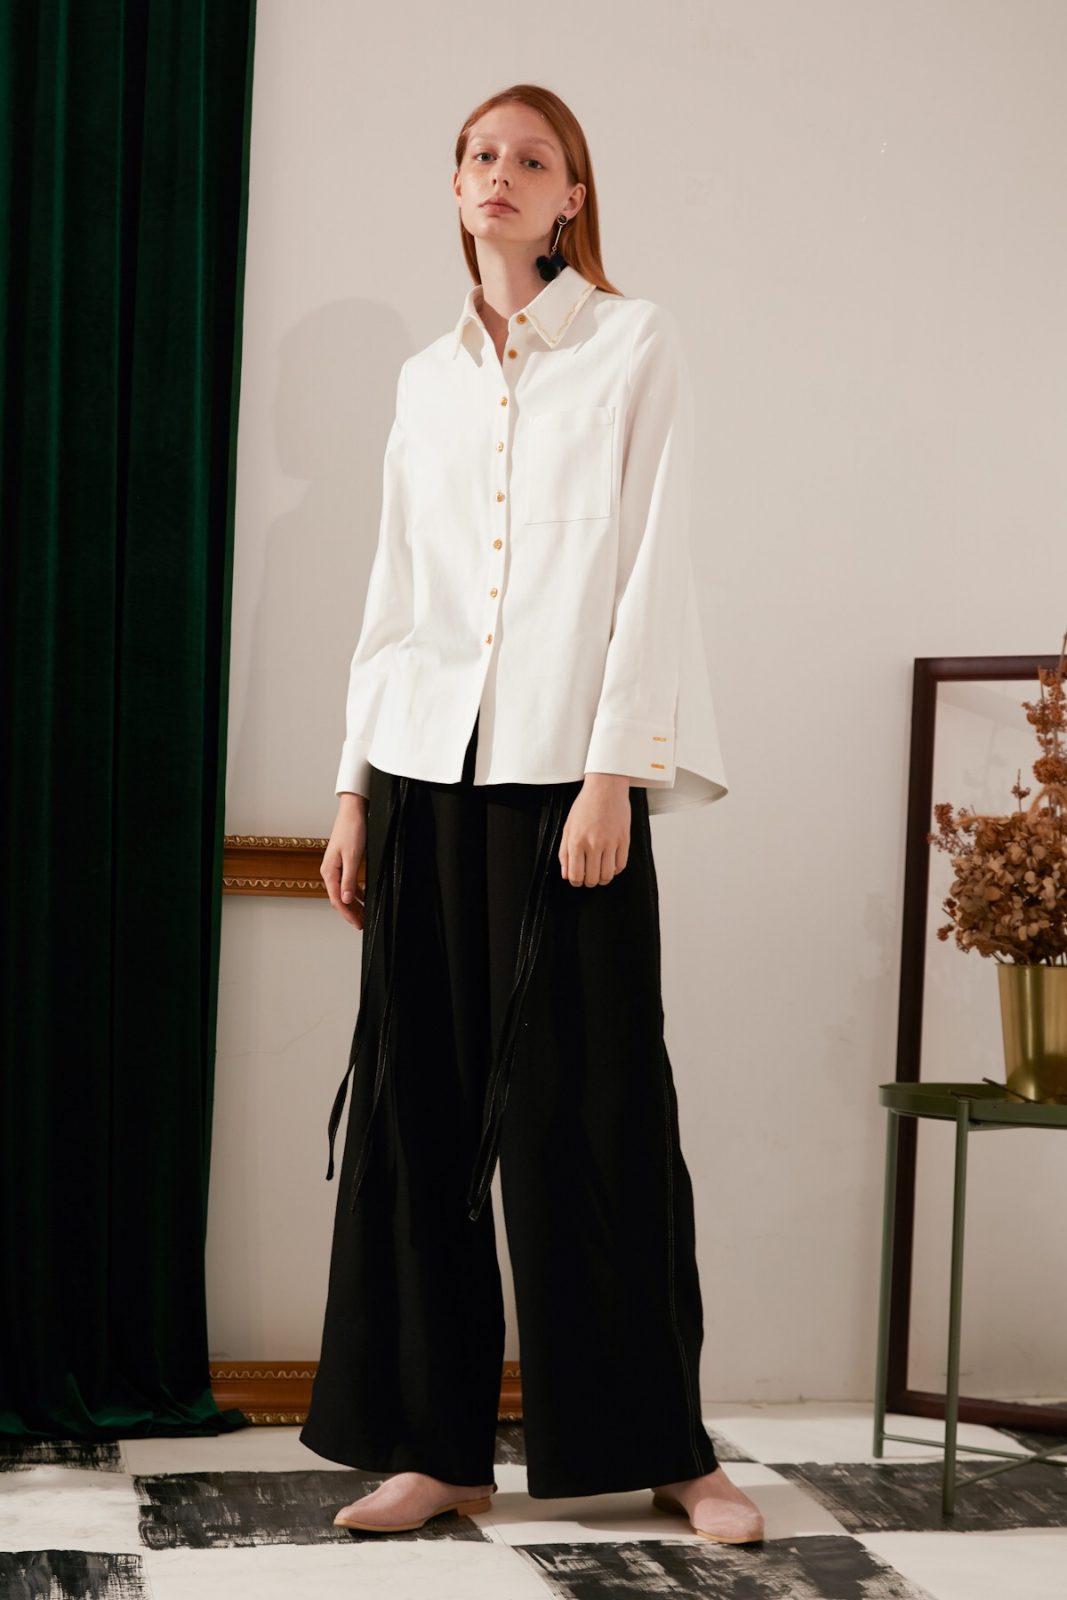 SKYE modern minimalist women fashion long sleeve shirt with gold embroidered collar white 4